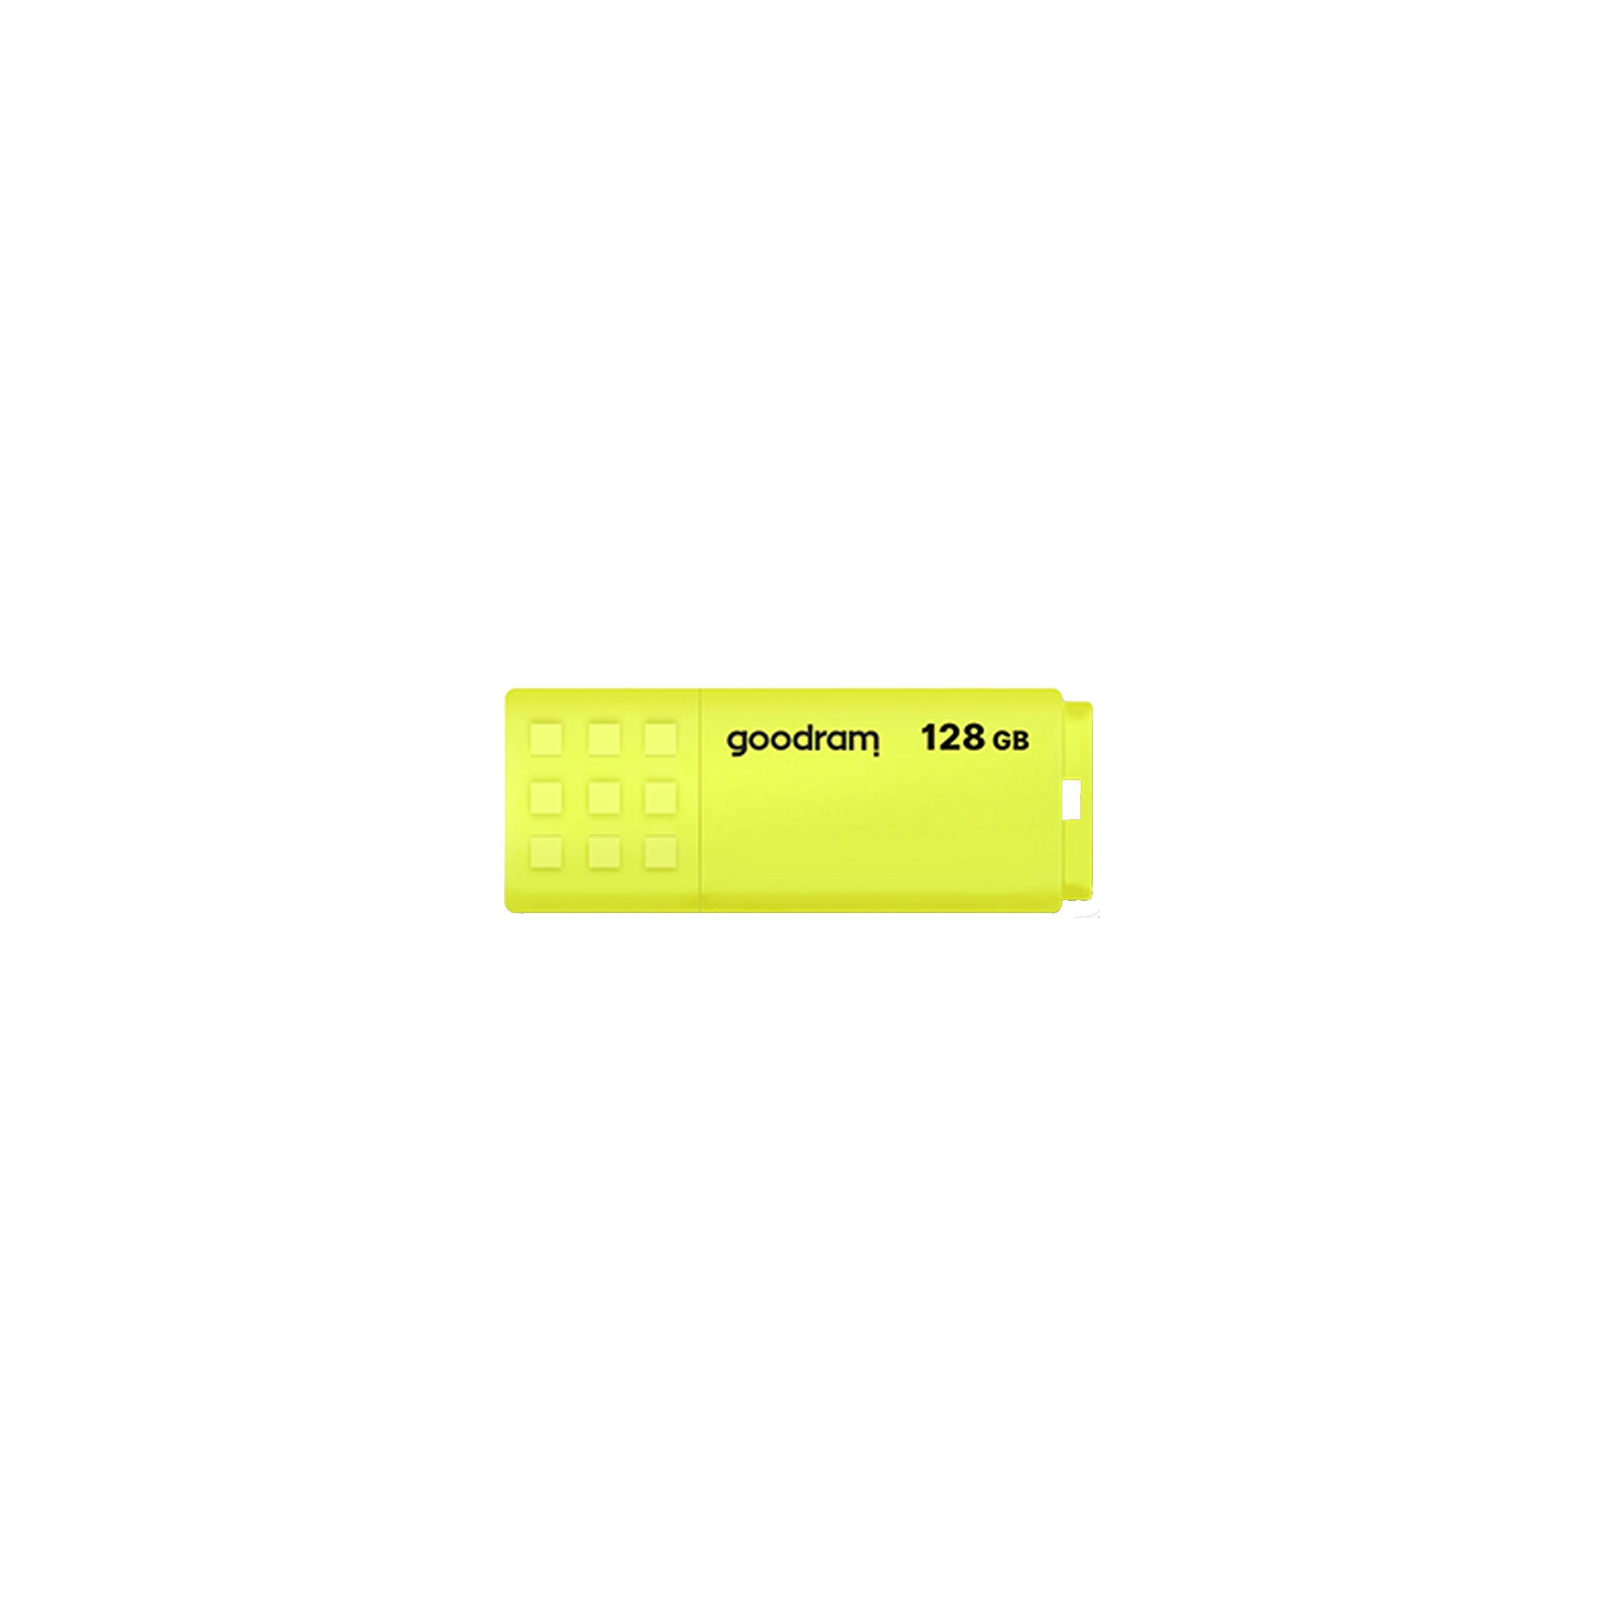 USB флеш накопитель Goodram 16GB UME2 Yellow USB 2.0 (UME2-0160Y0R11)